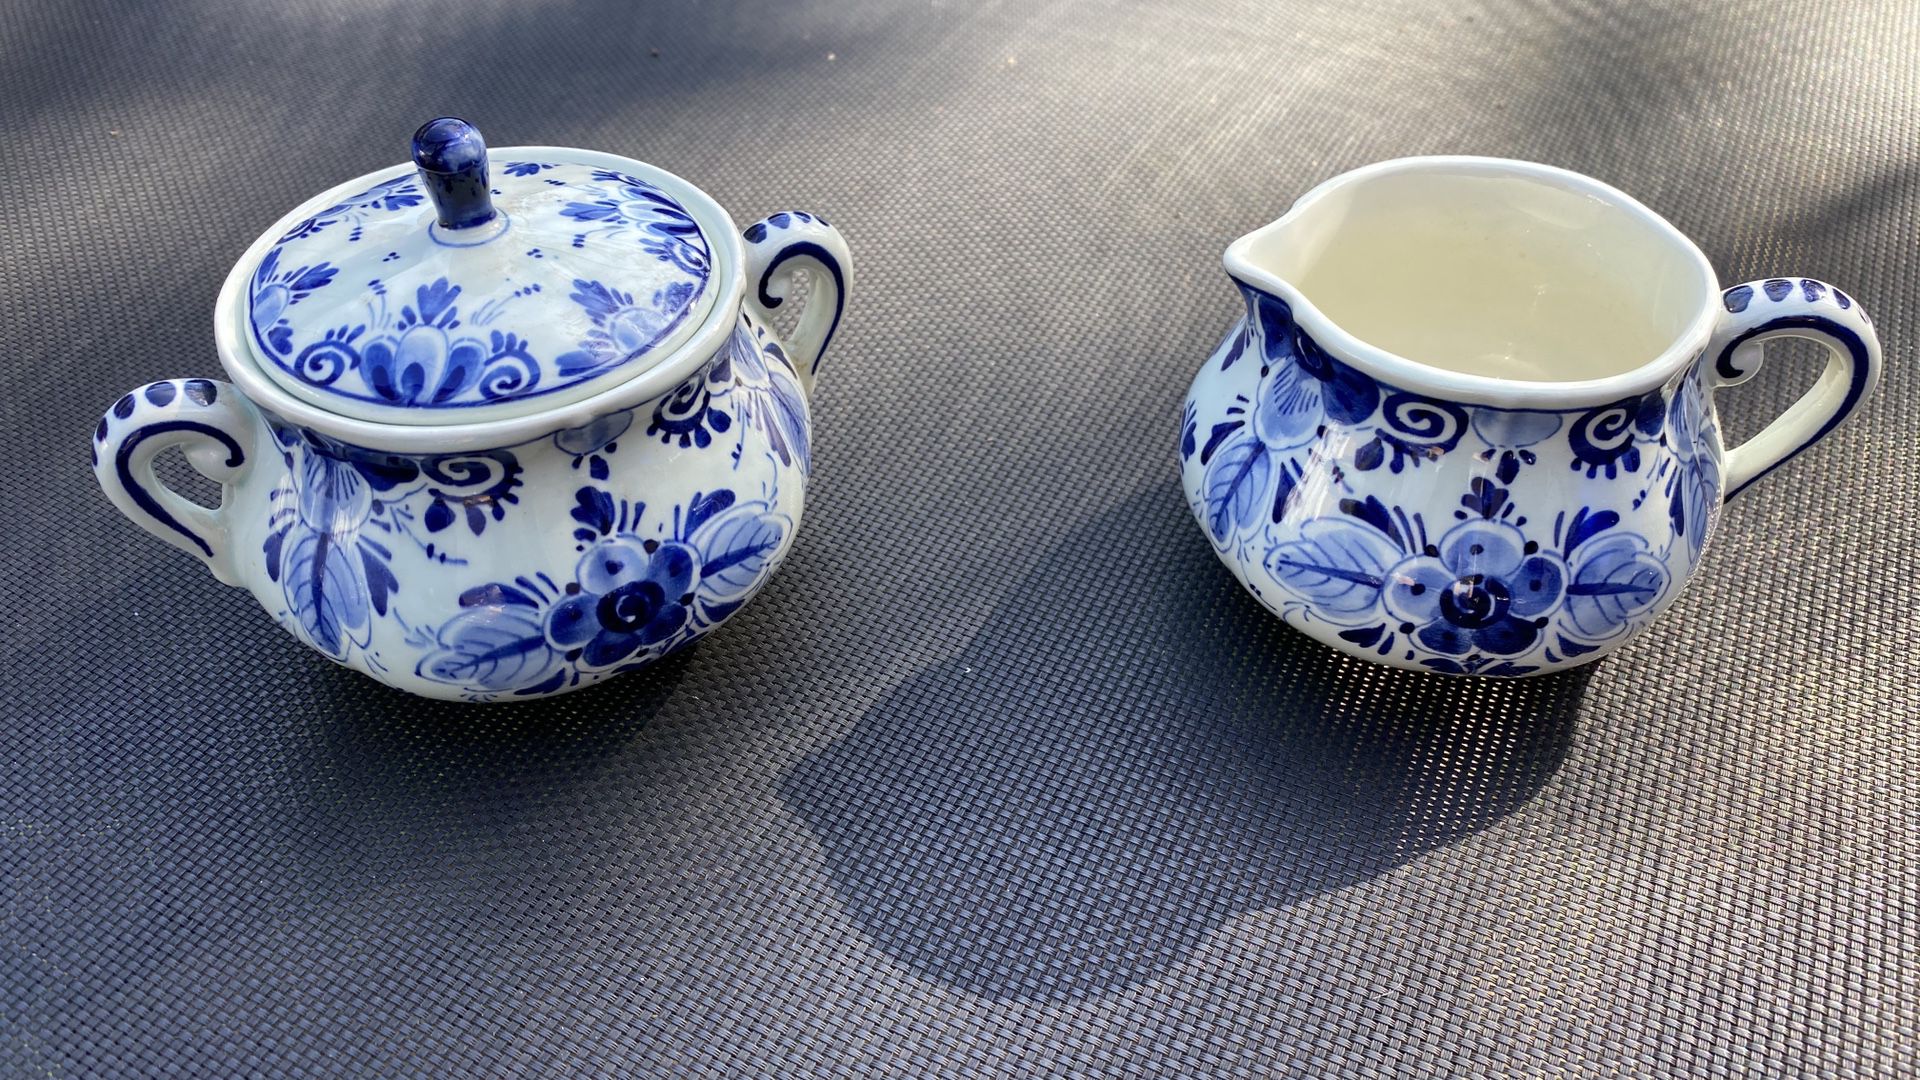 Regina 1921 tea set from Holland